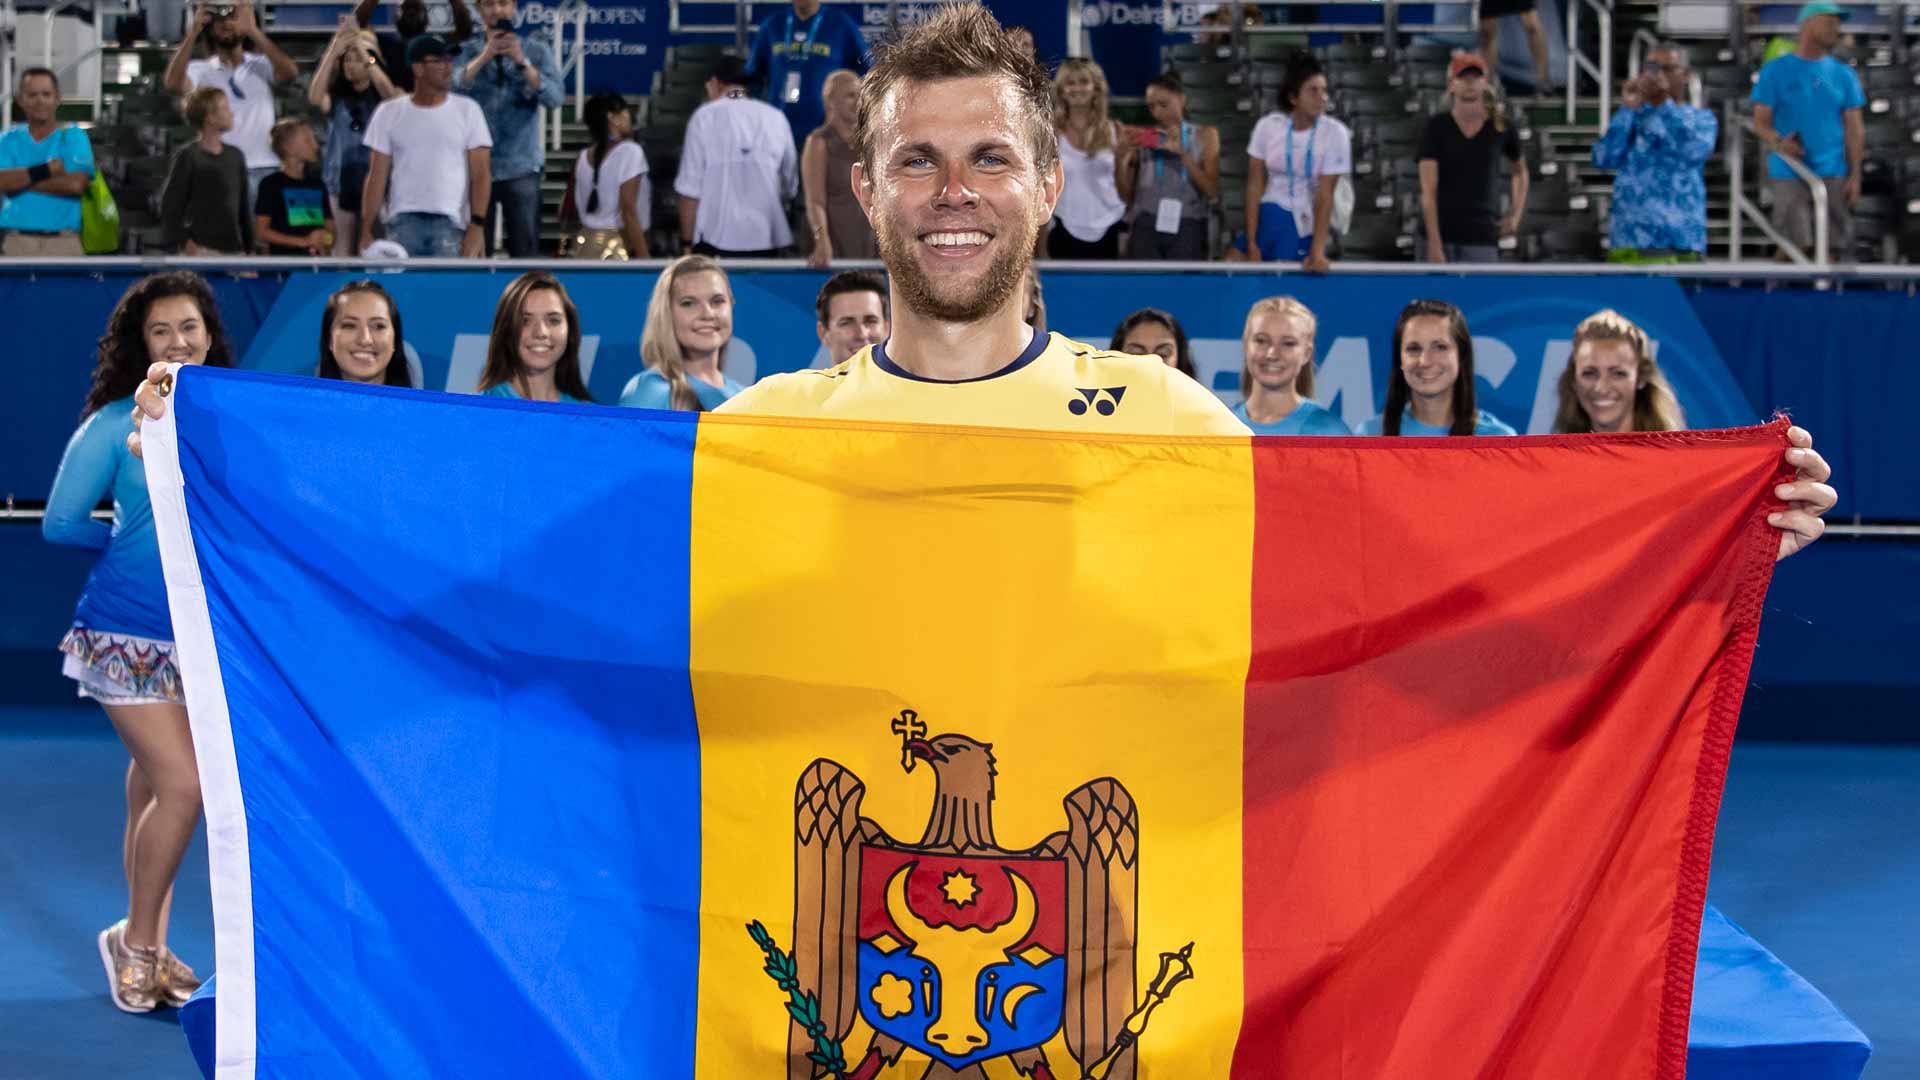 Radu Albot won his lone ATP Tour singles title in 2019 at Delray Beach.